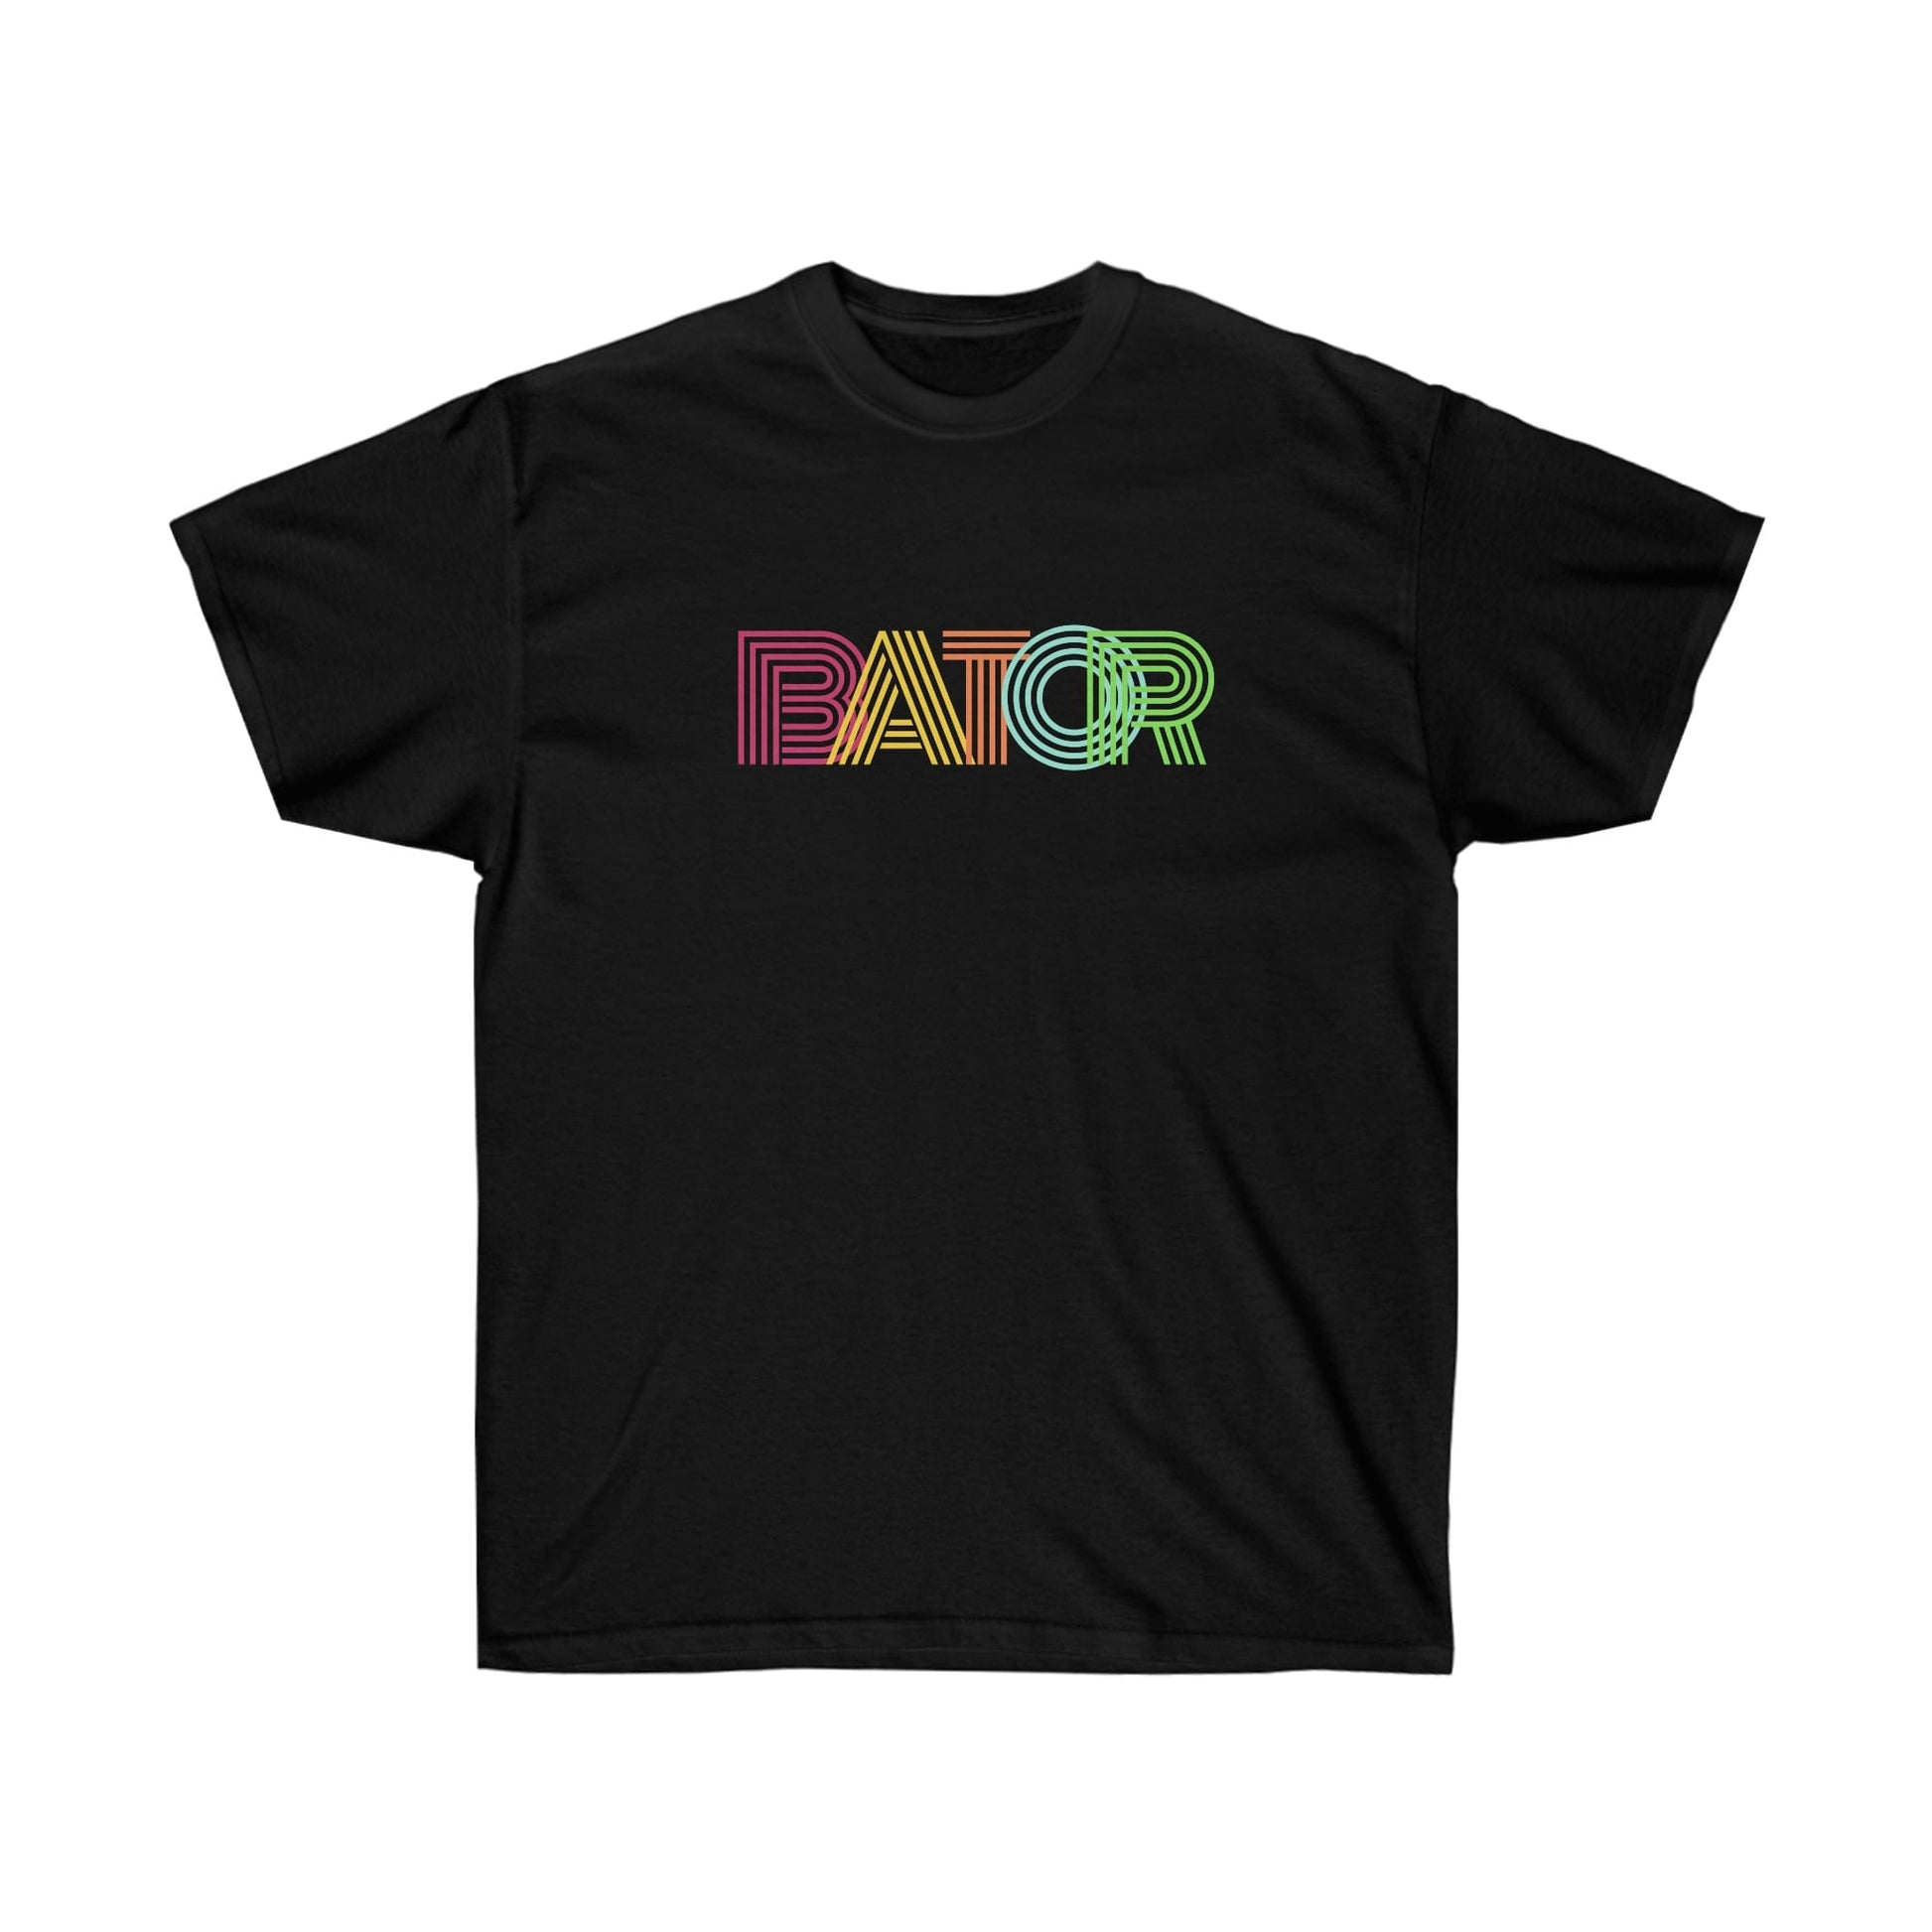 T-Shirt Black / S Retro Bator LEATHERDADDY BATOR